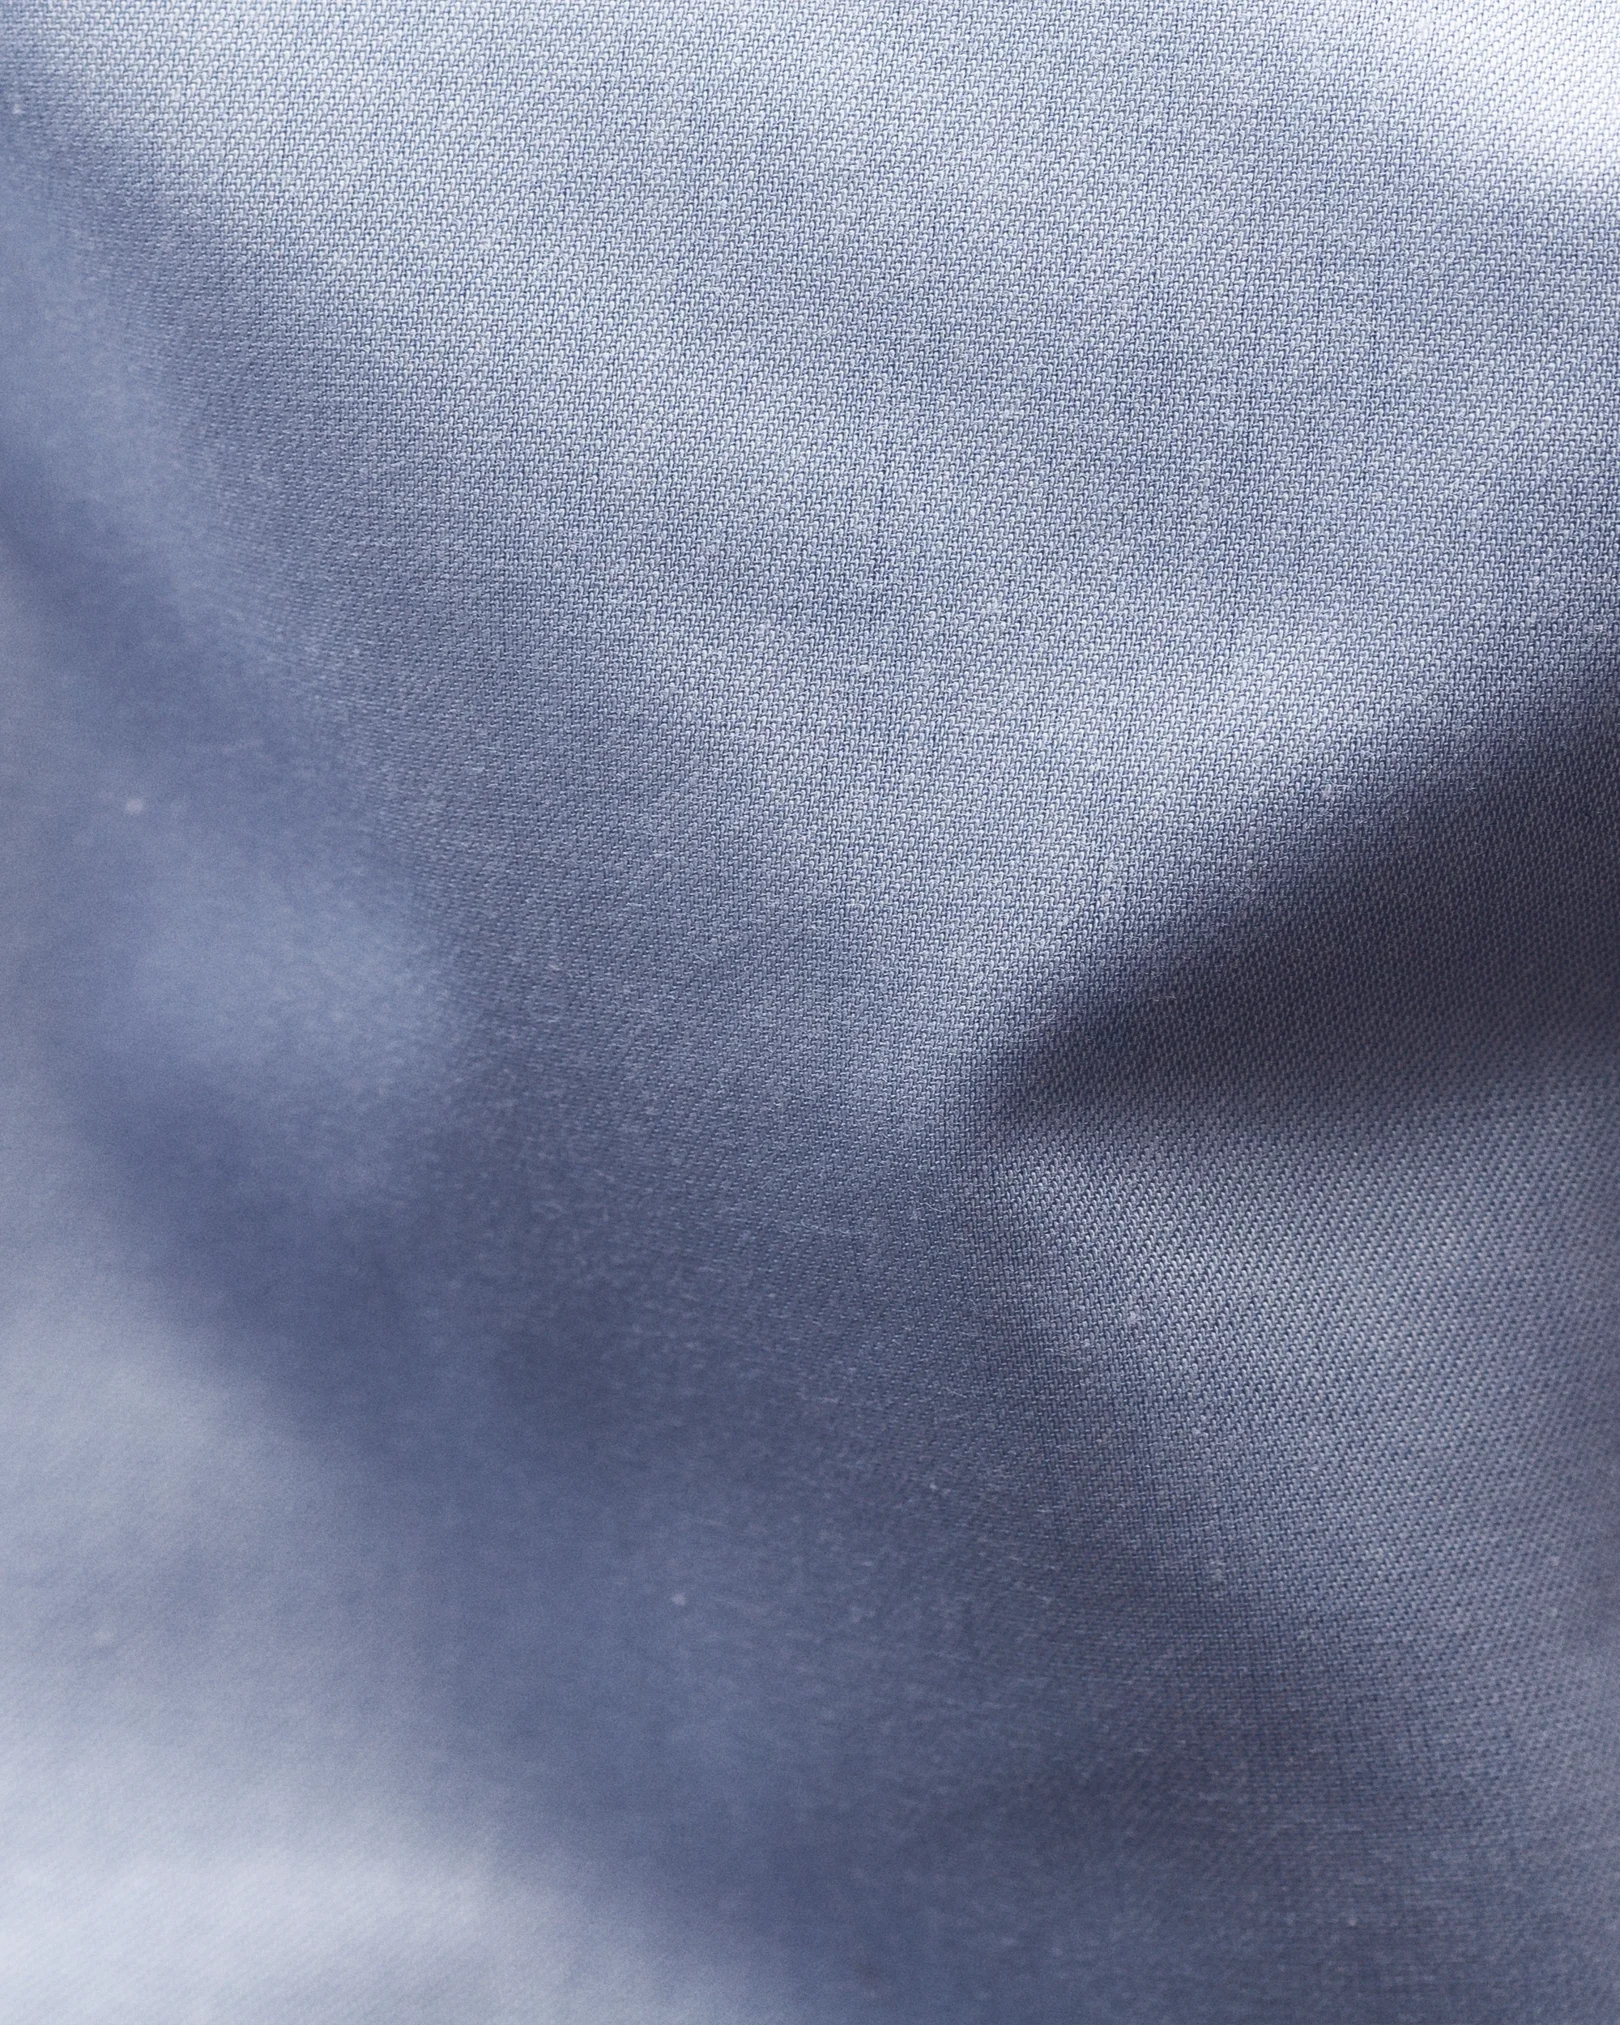 Eton - sky blue twill shirt geometric details